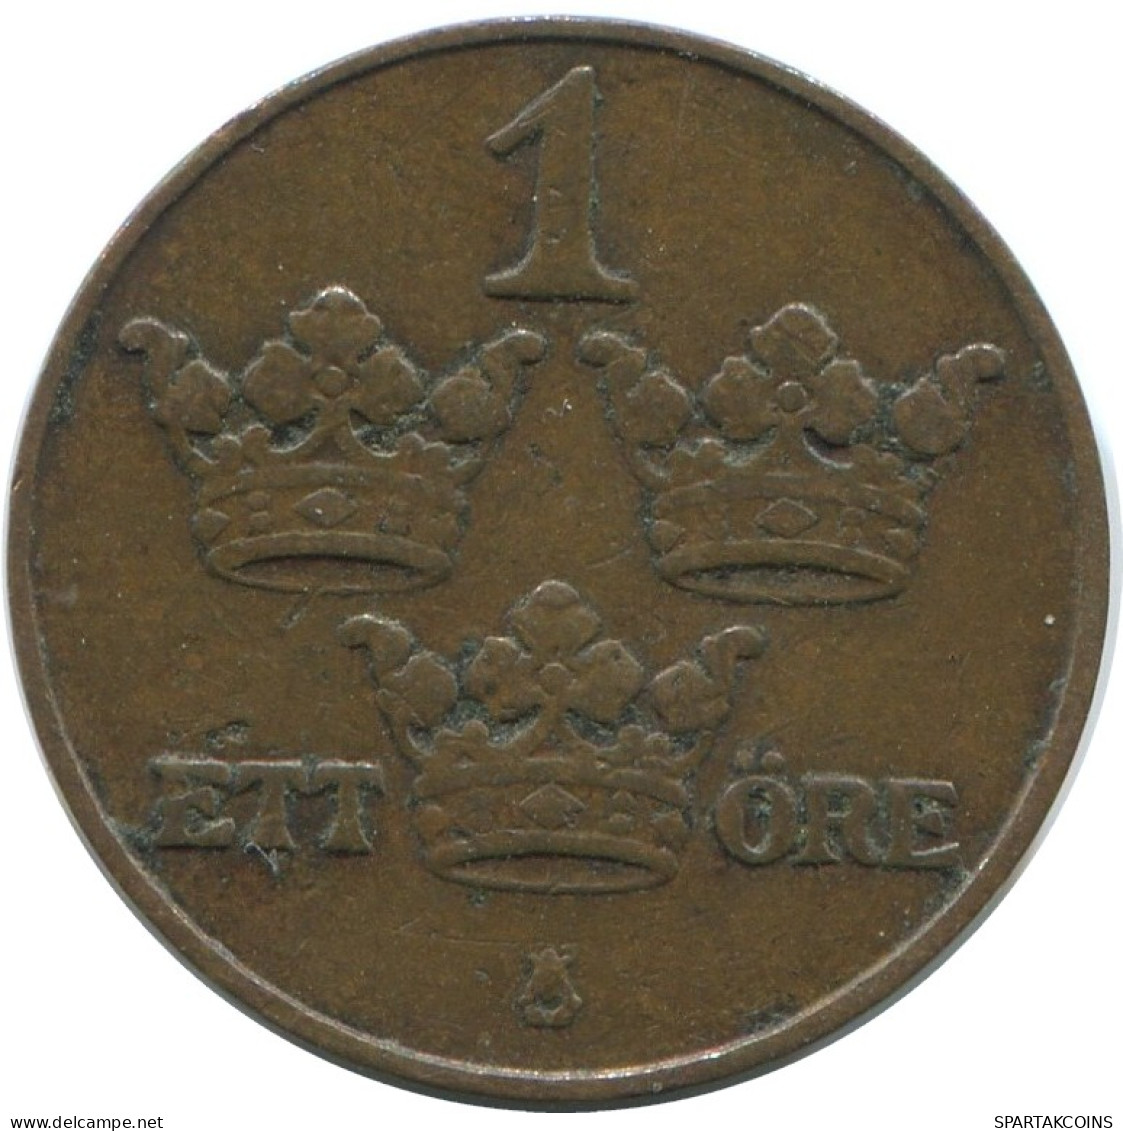 1 ORE 1910 SWEDEN Coin #AD361.2.U.A - Suède